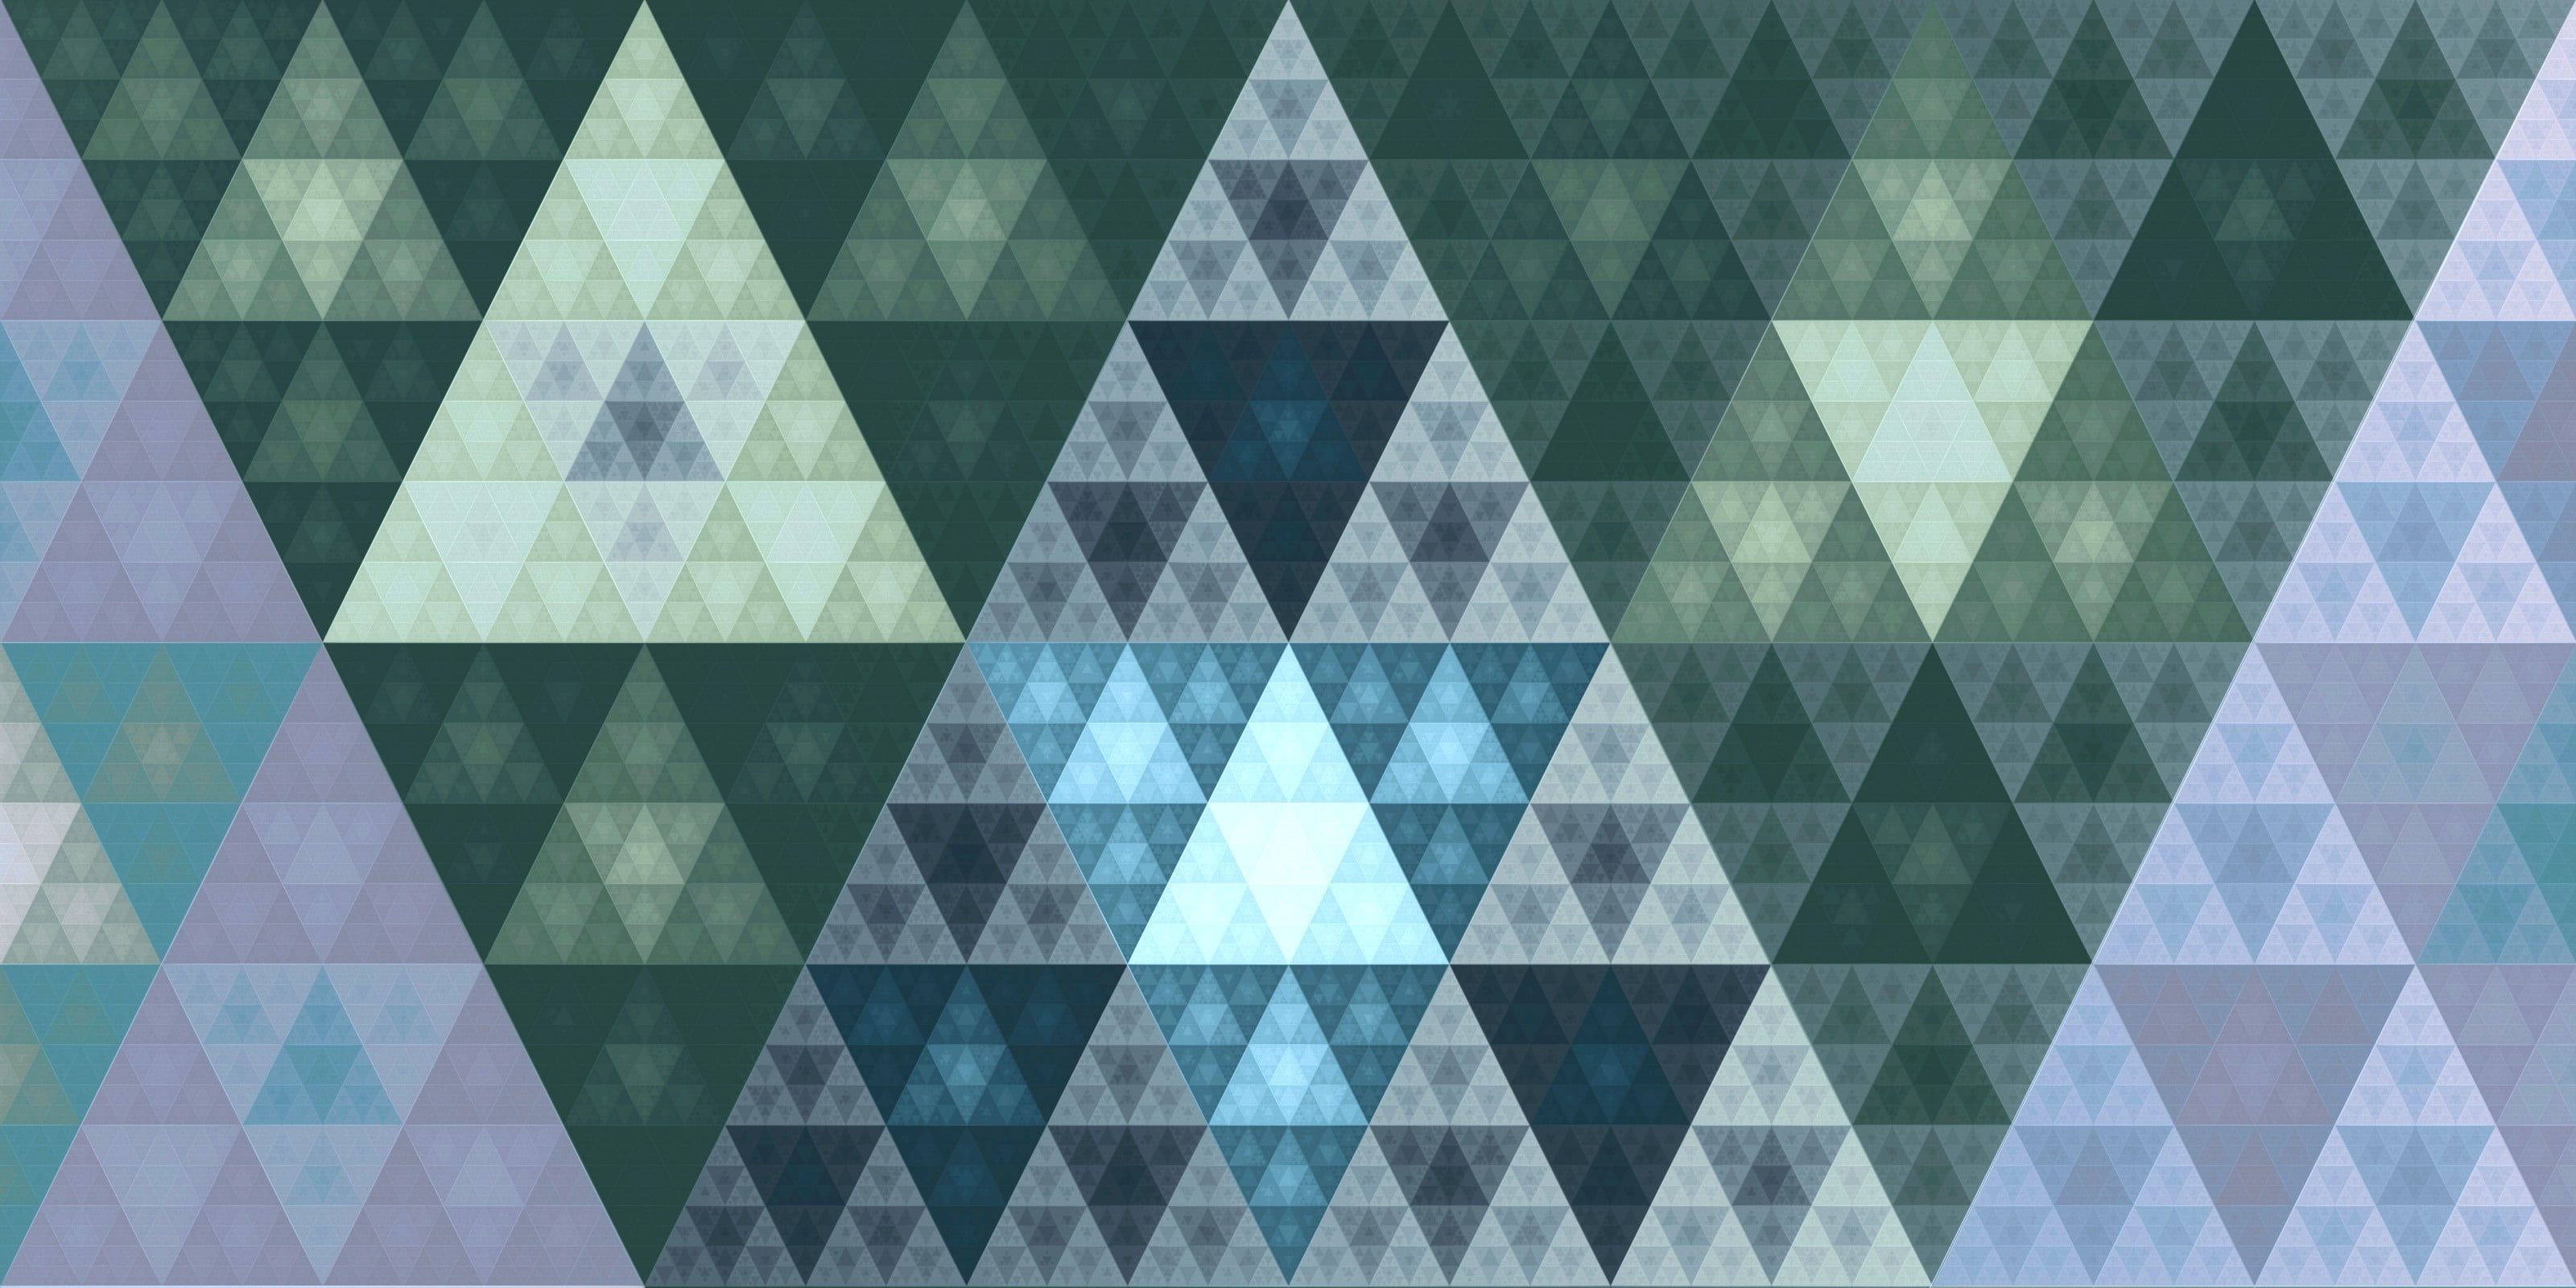 Golden Ratio: Green and white argyle pattern, Fractal, Fibonacci sequence, Isosceles triangles. 3200x1600 Dual Screen Wallpaper.